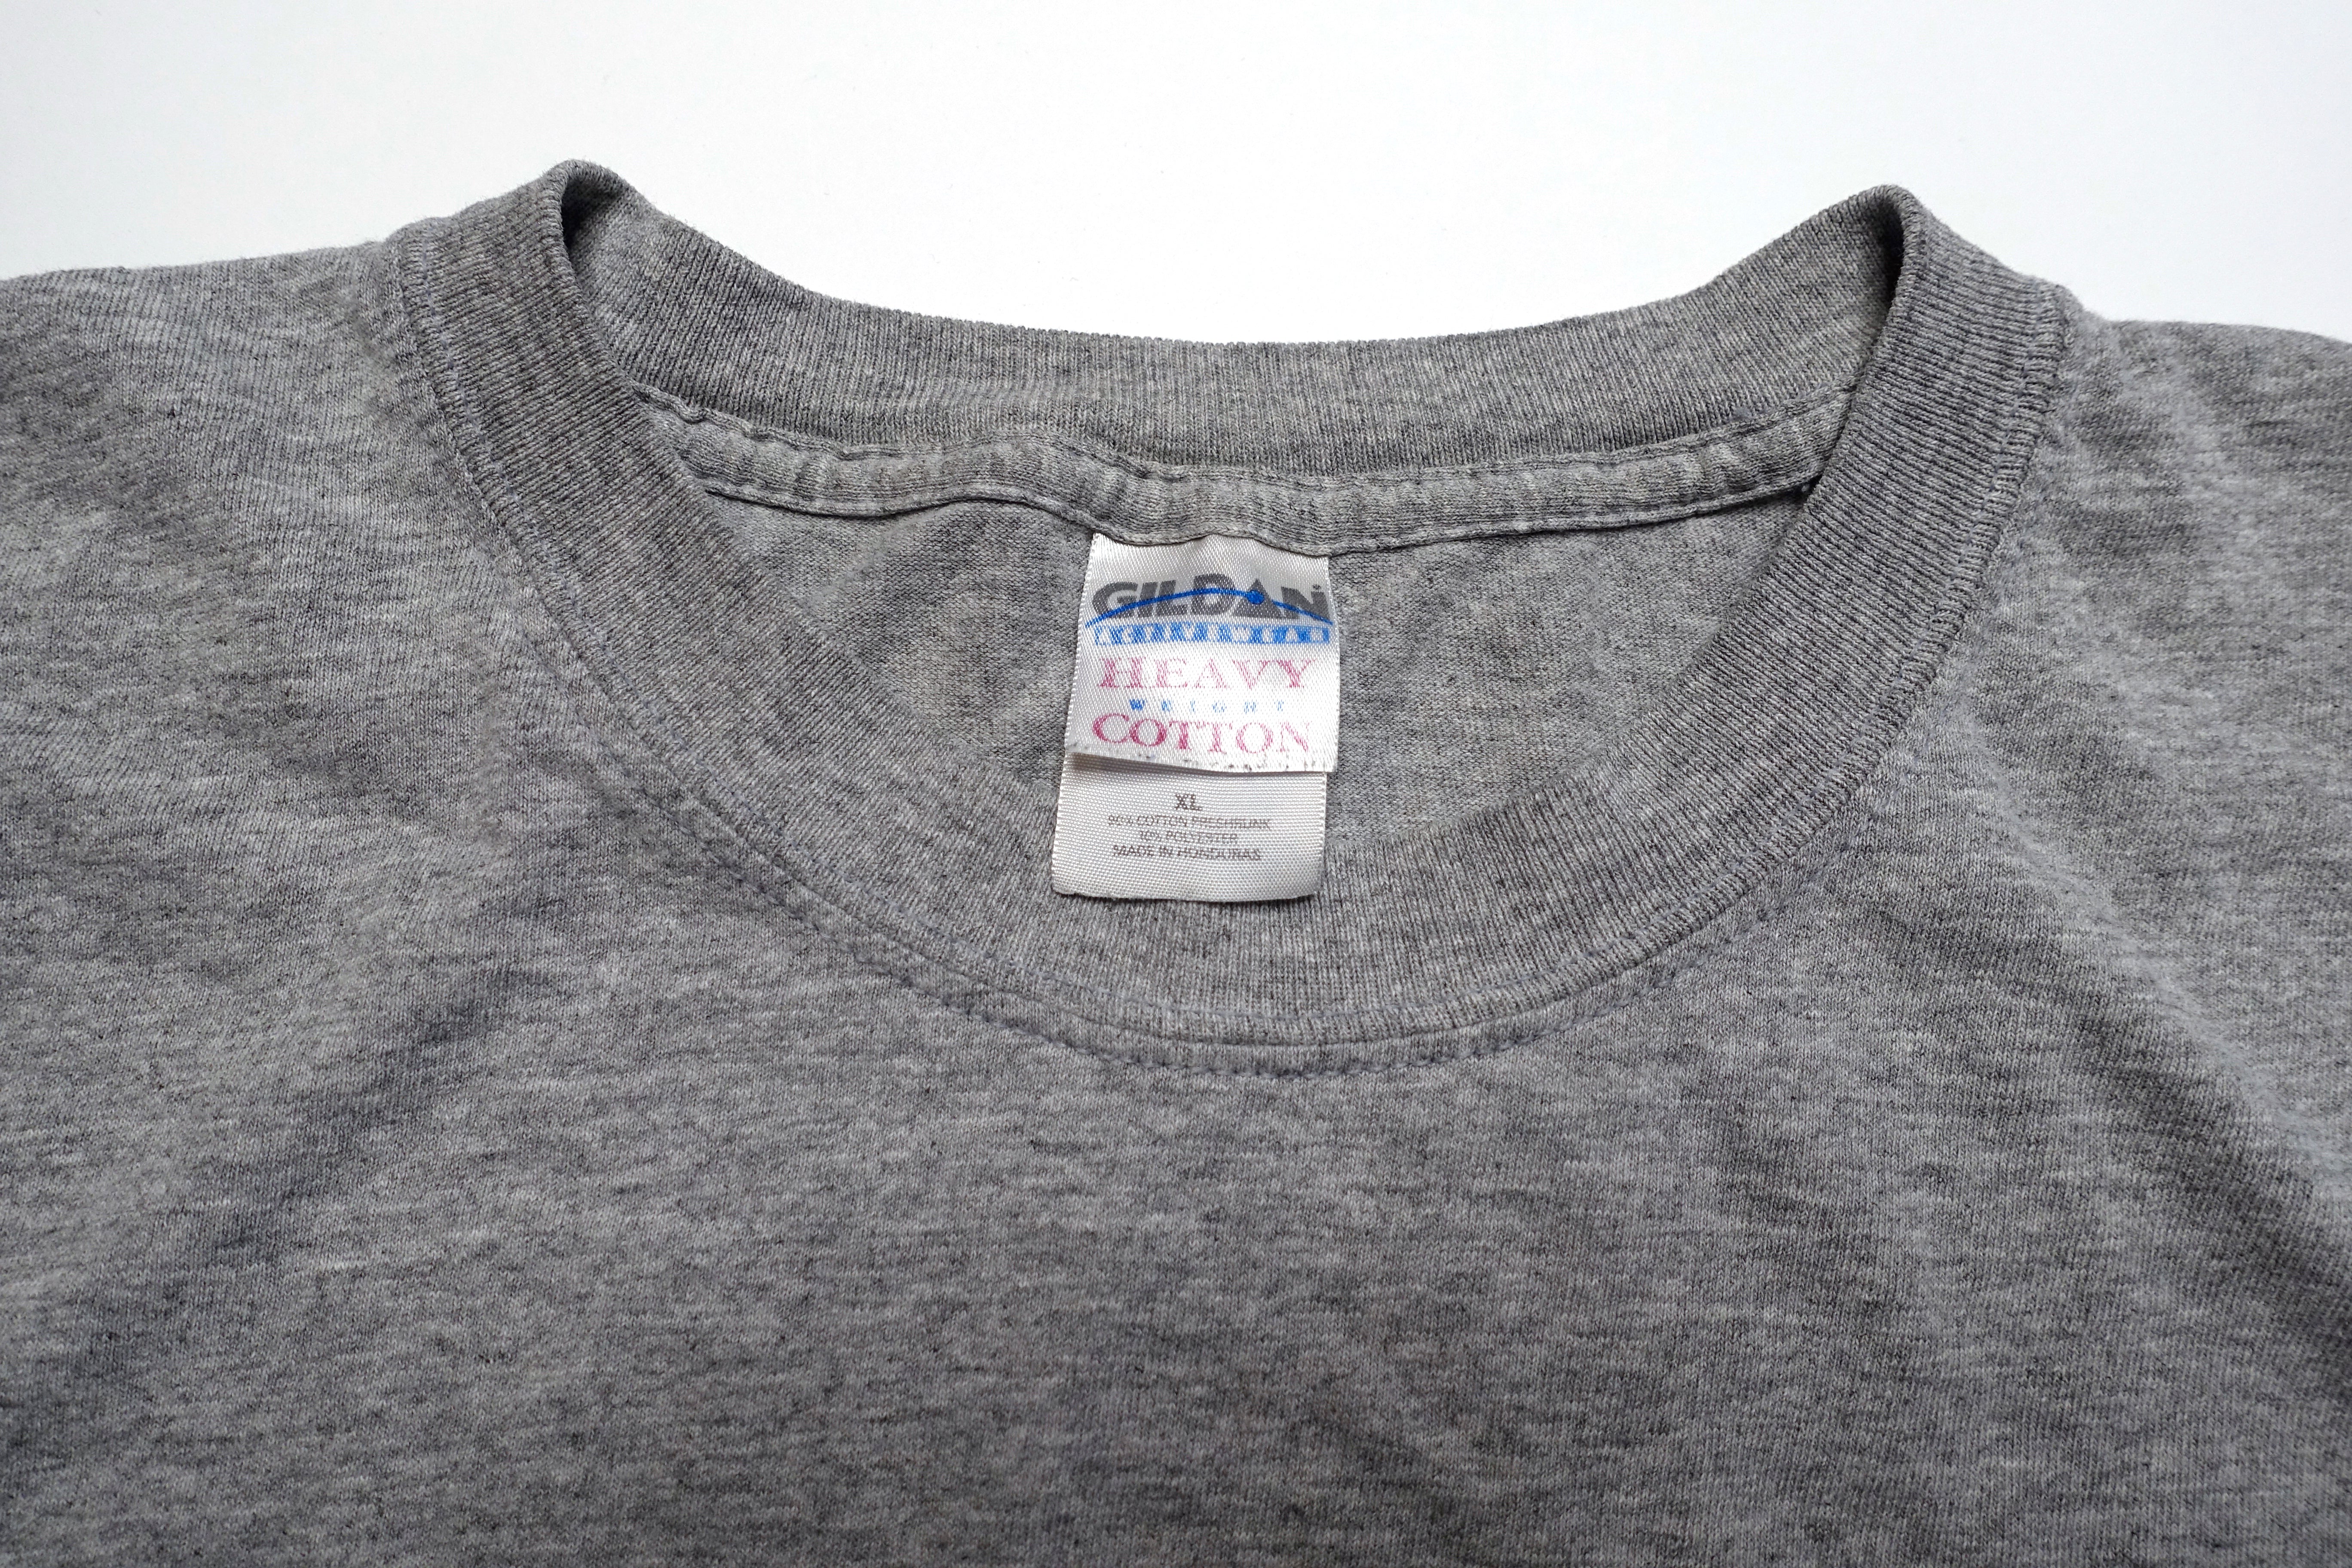 Bigwig – Qualite Since 1995 Tour Shirt Size XL